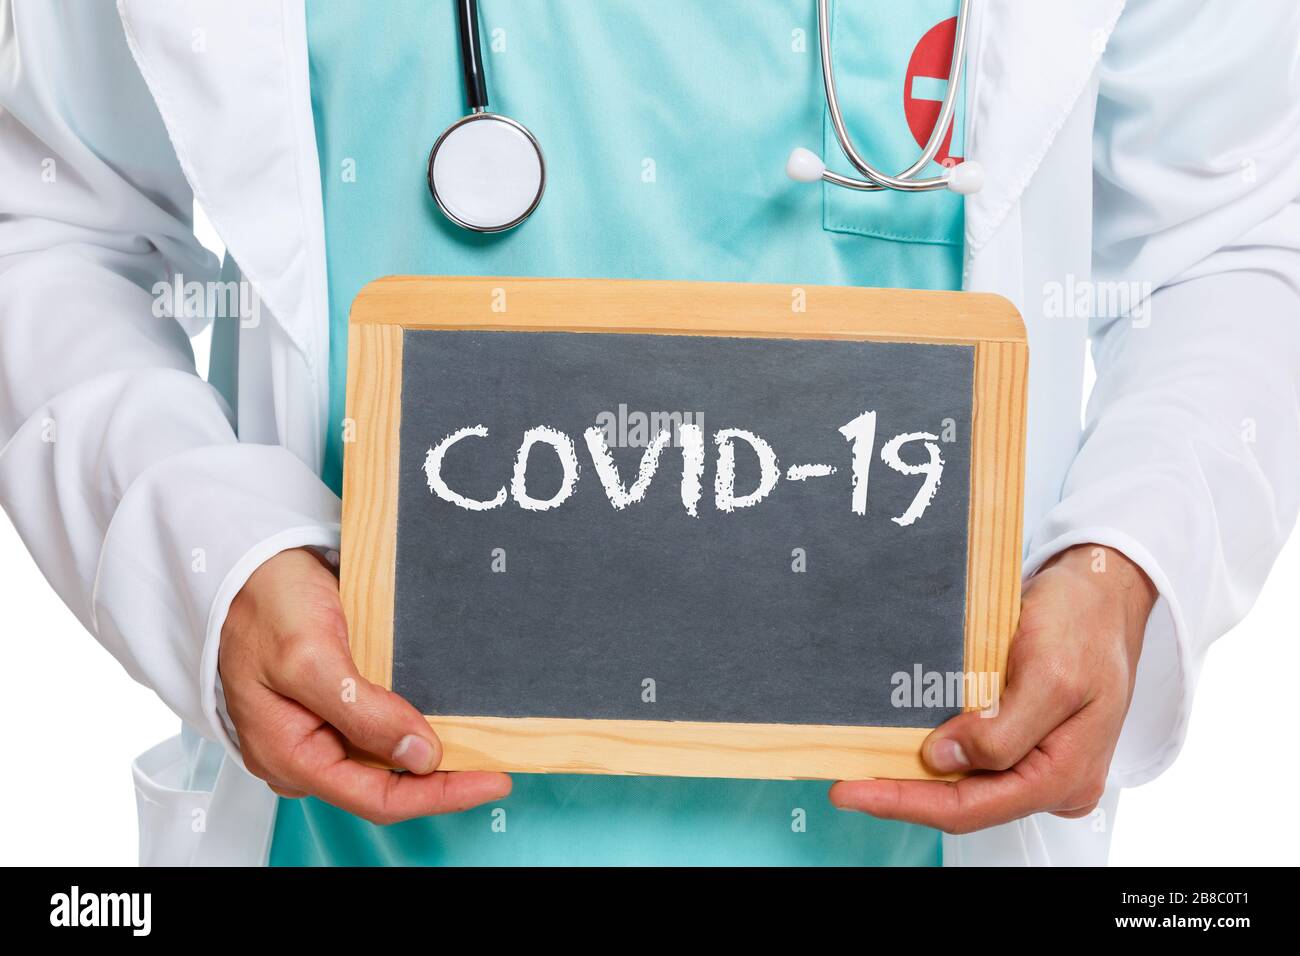 COVID-19 COVID Corona virus coronavirus disease doctor ill illness health slate board Stock Photo